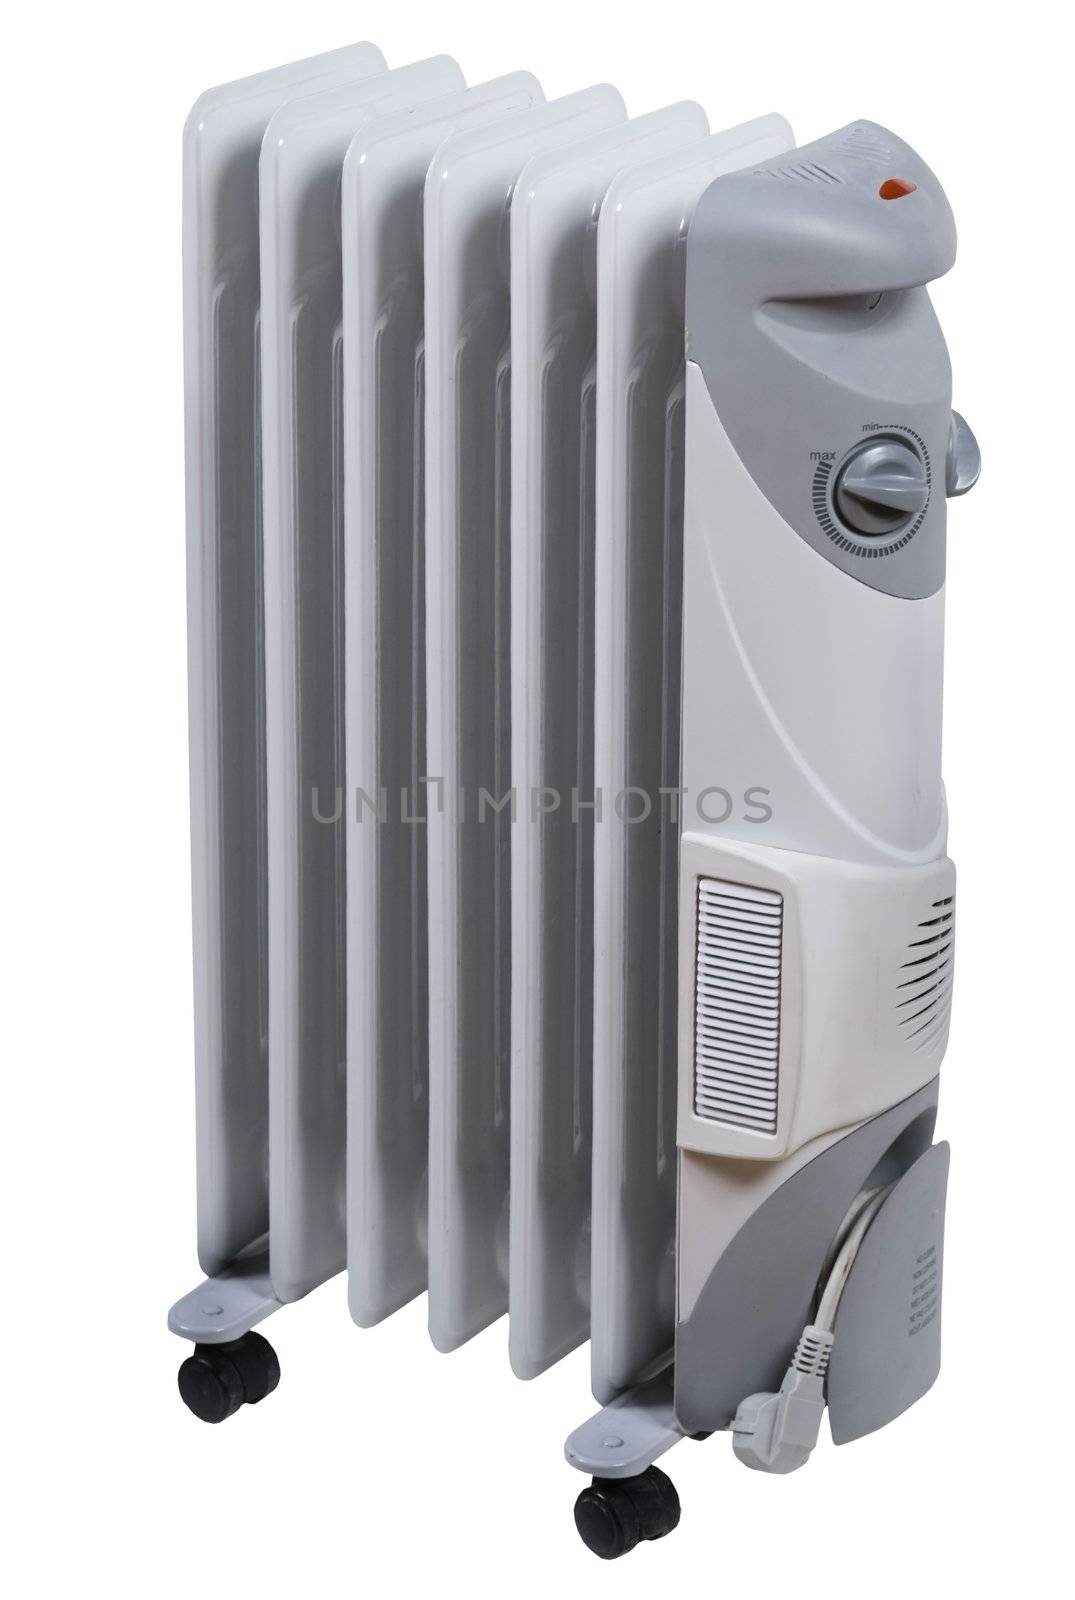 Oil heater - radiator a white background


